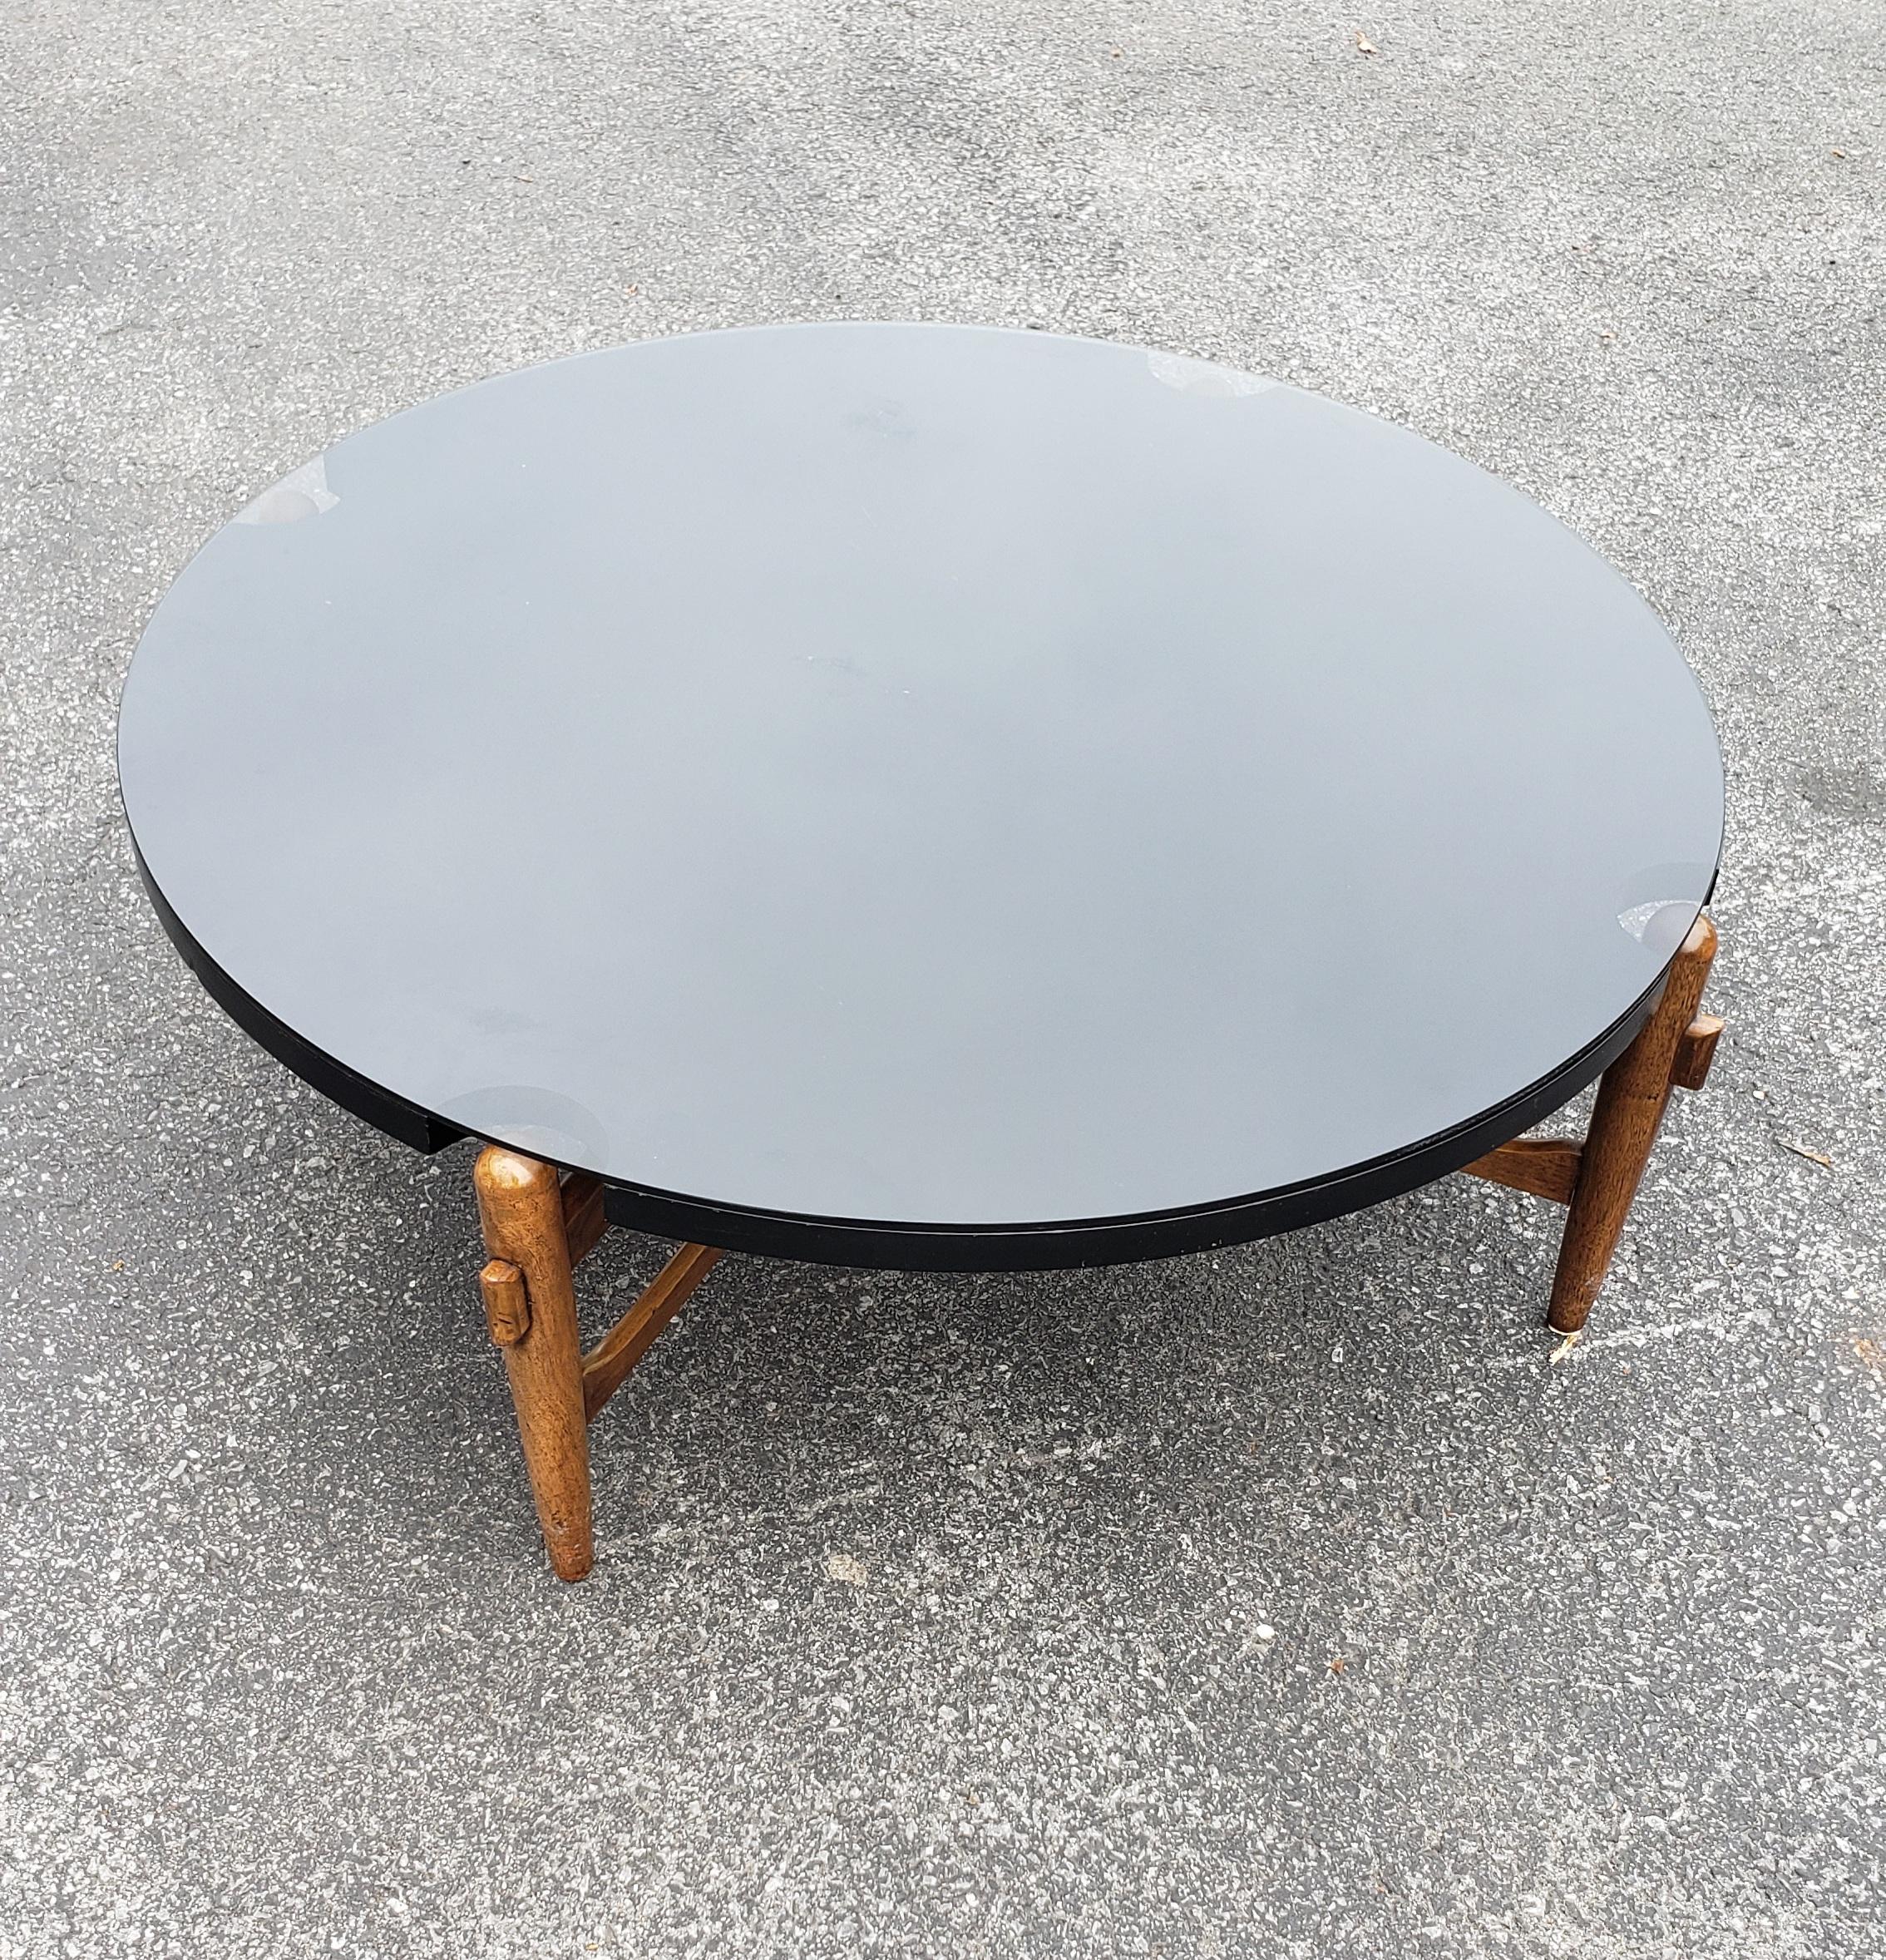 Greta Grossman Danish Modern Walnut with Laminate and Glass Top Coffee Table For Sale 3